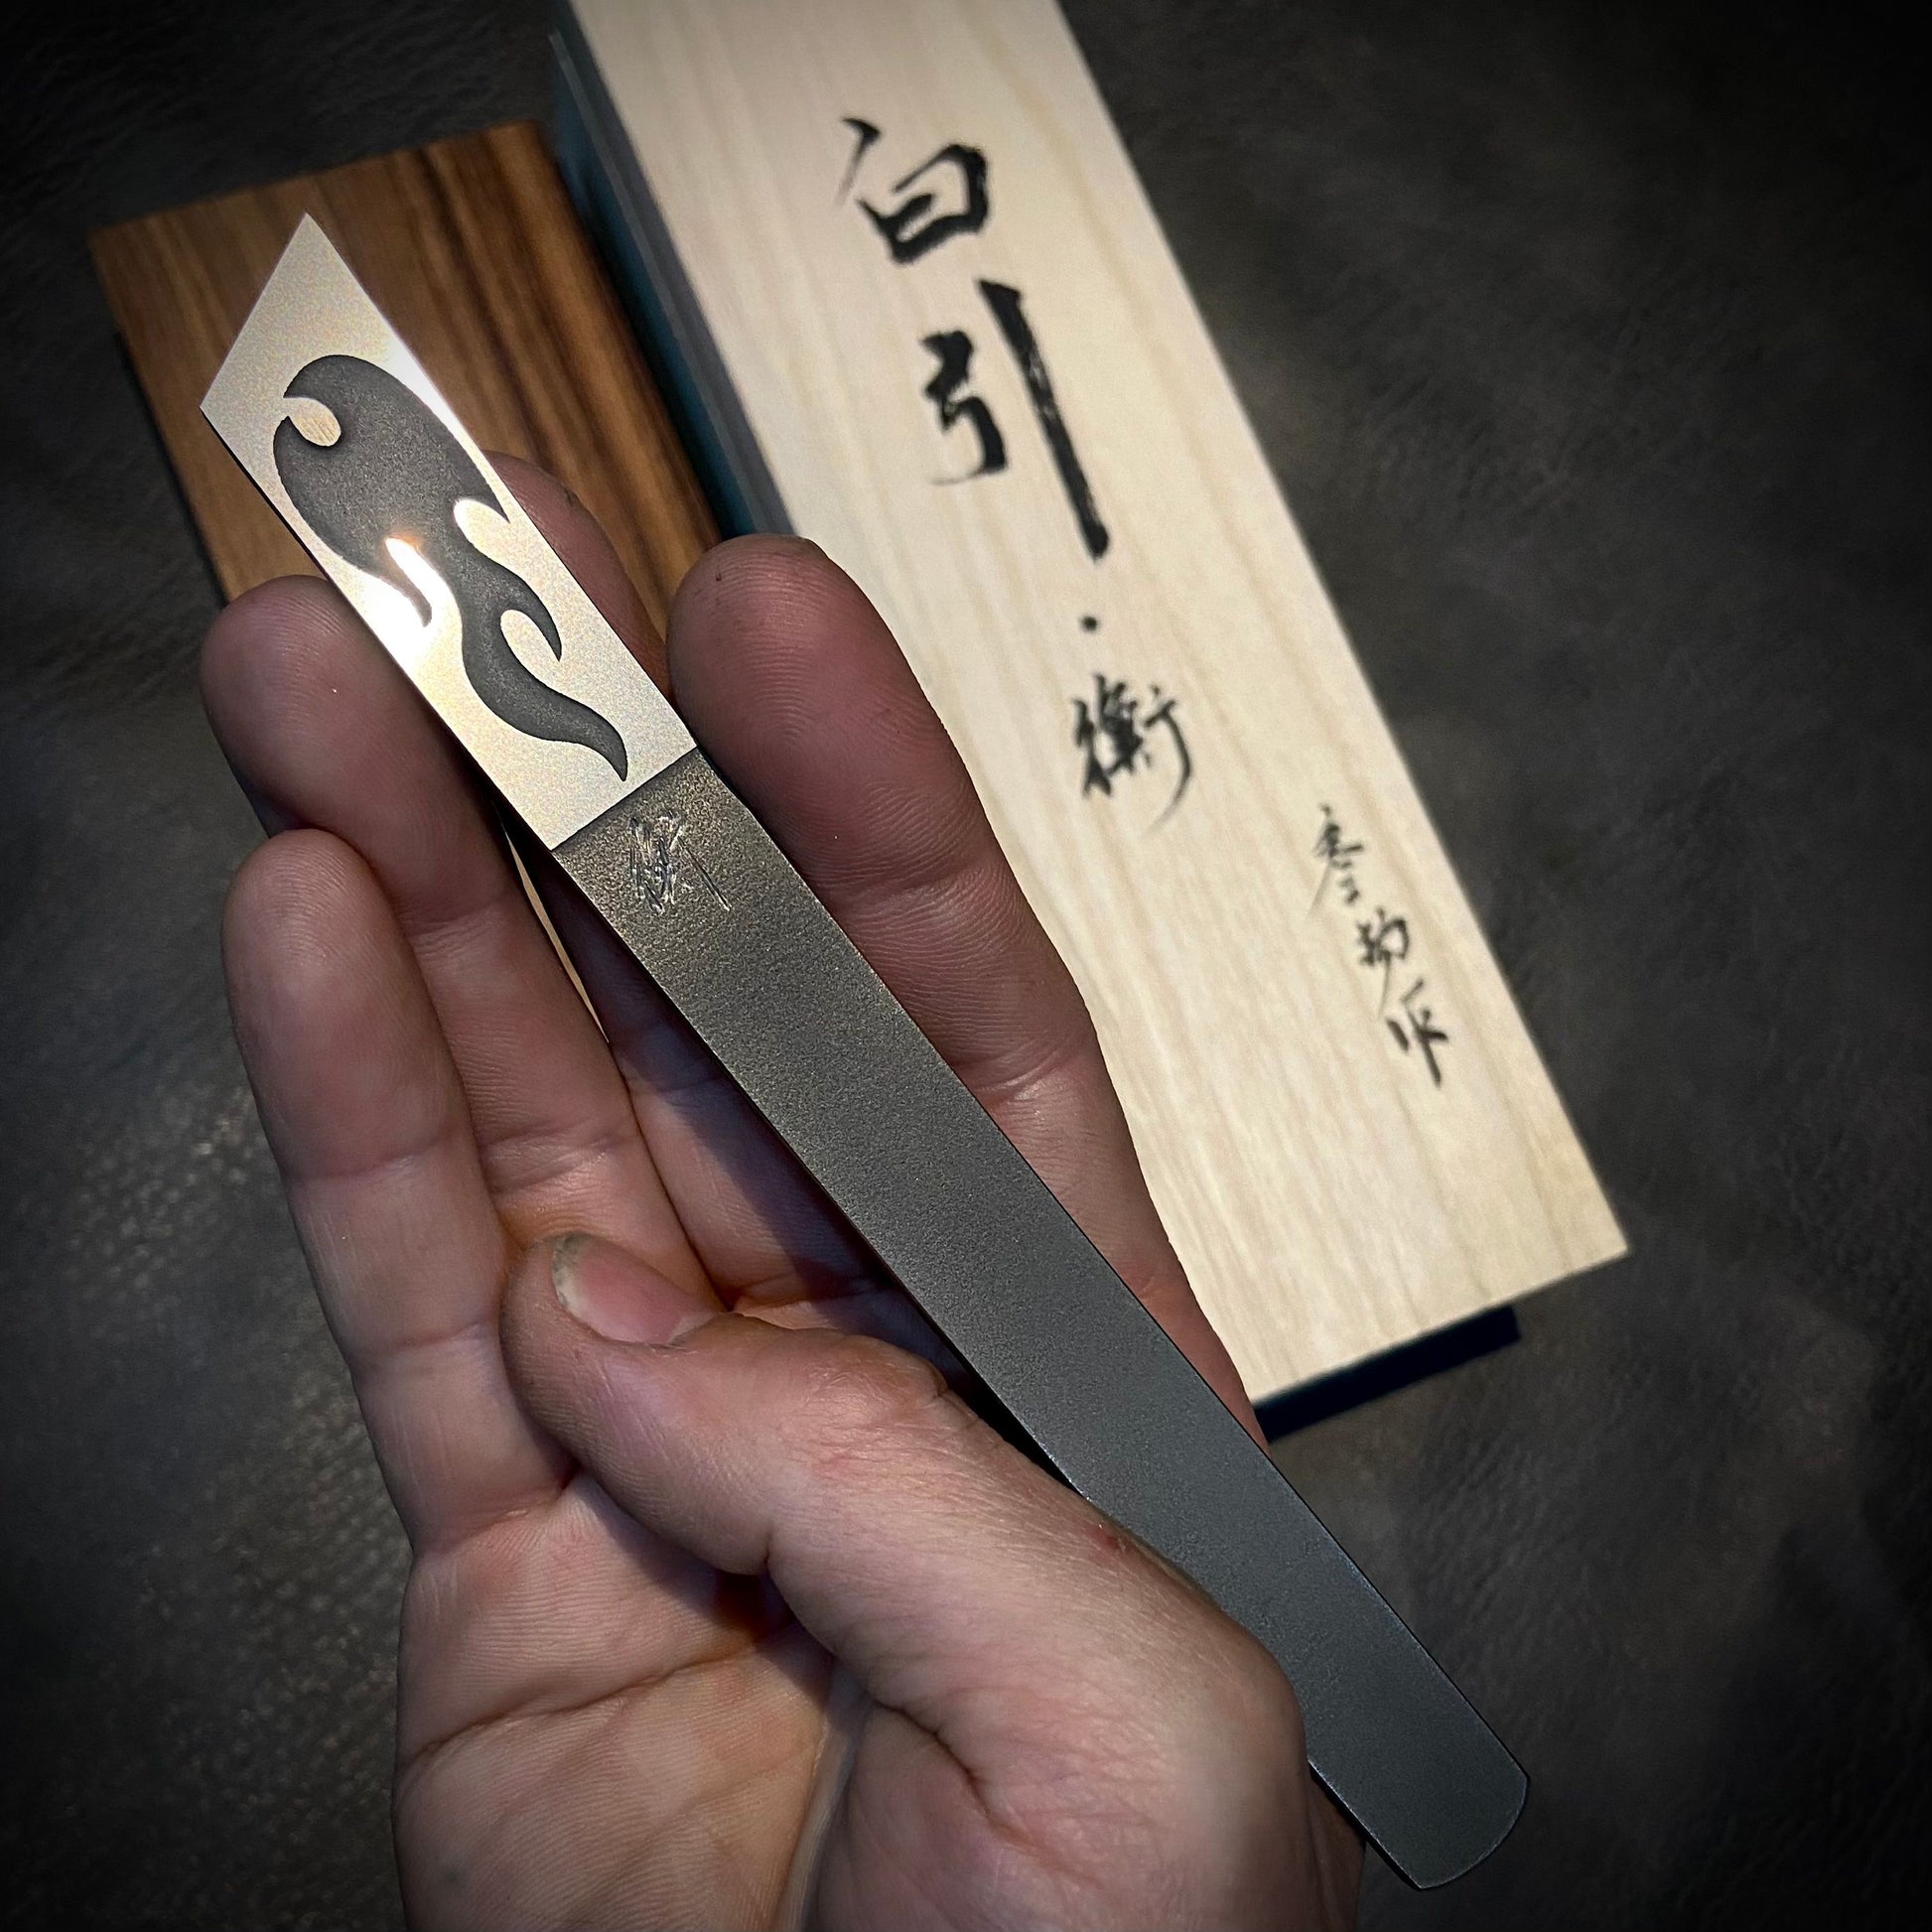 iGaging Ultra Precision Knife Blade Straight Edge, 12/300mm - 36-HKS-12 -  Penn Tool Co., Inc